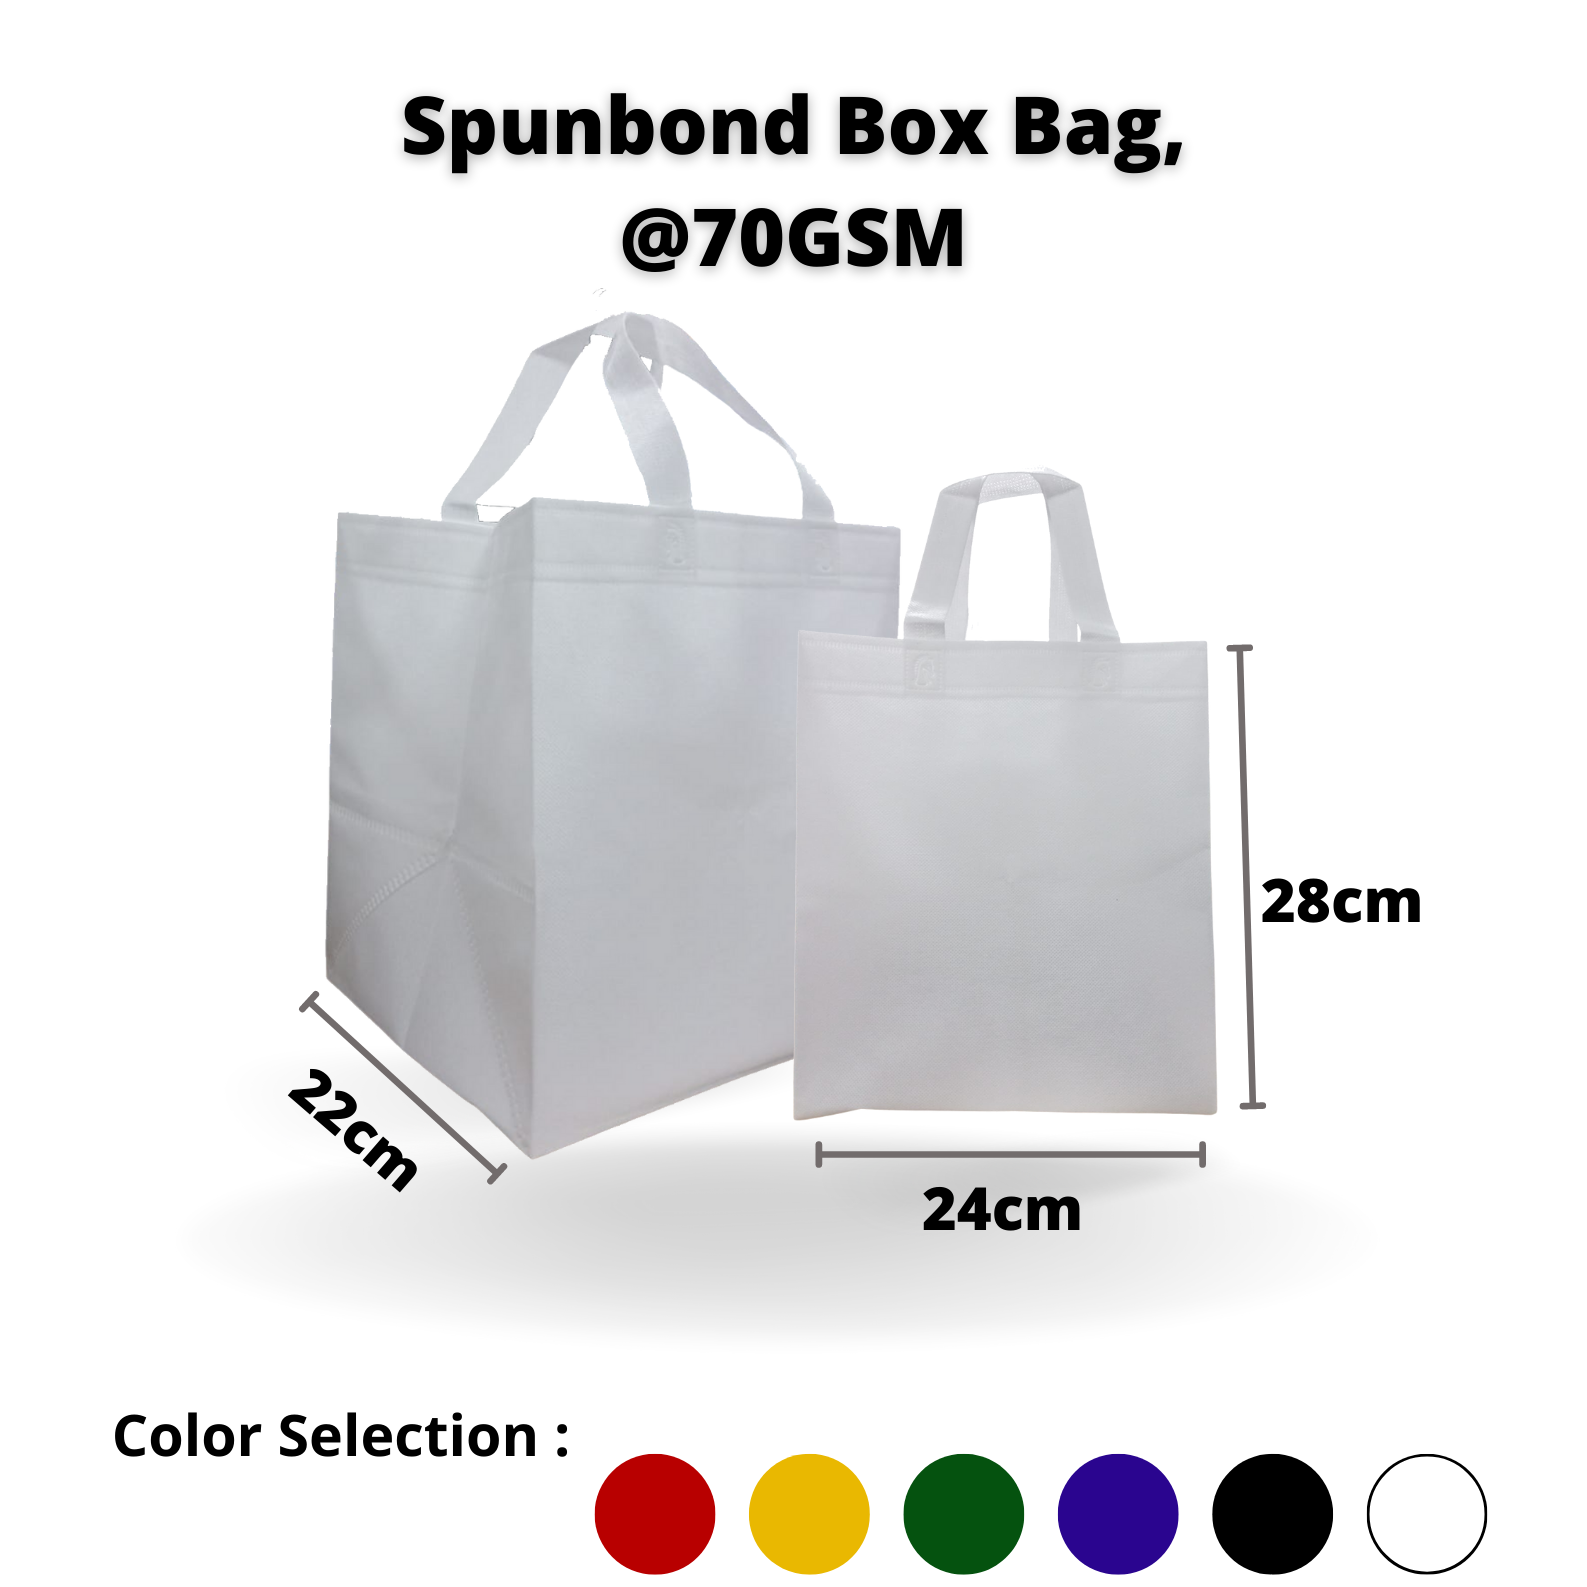 Spunbond Box Bag 24 Long